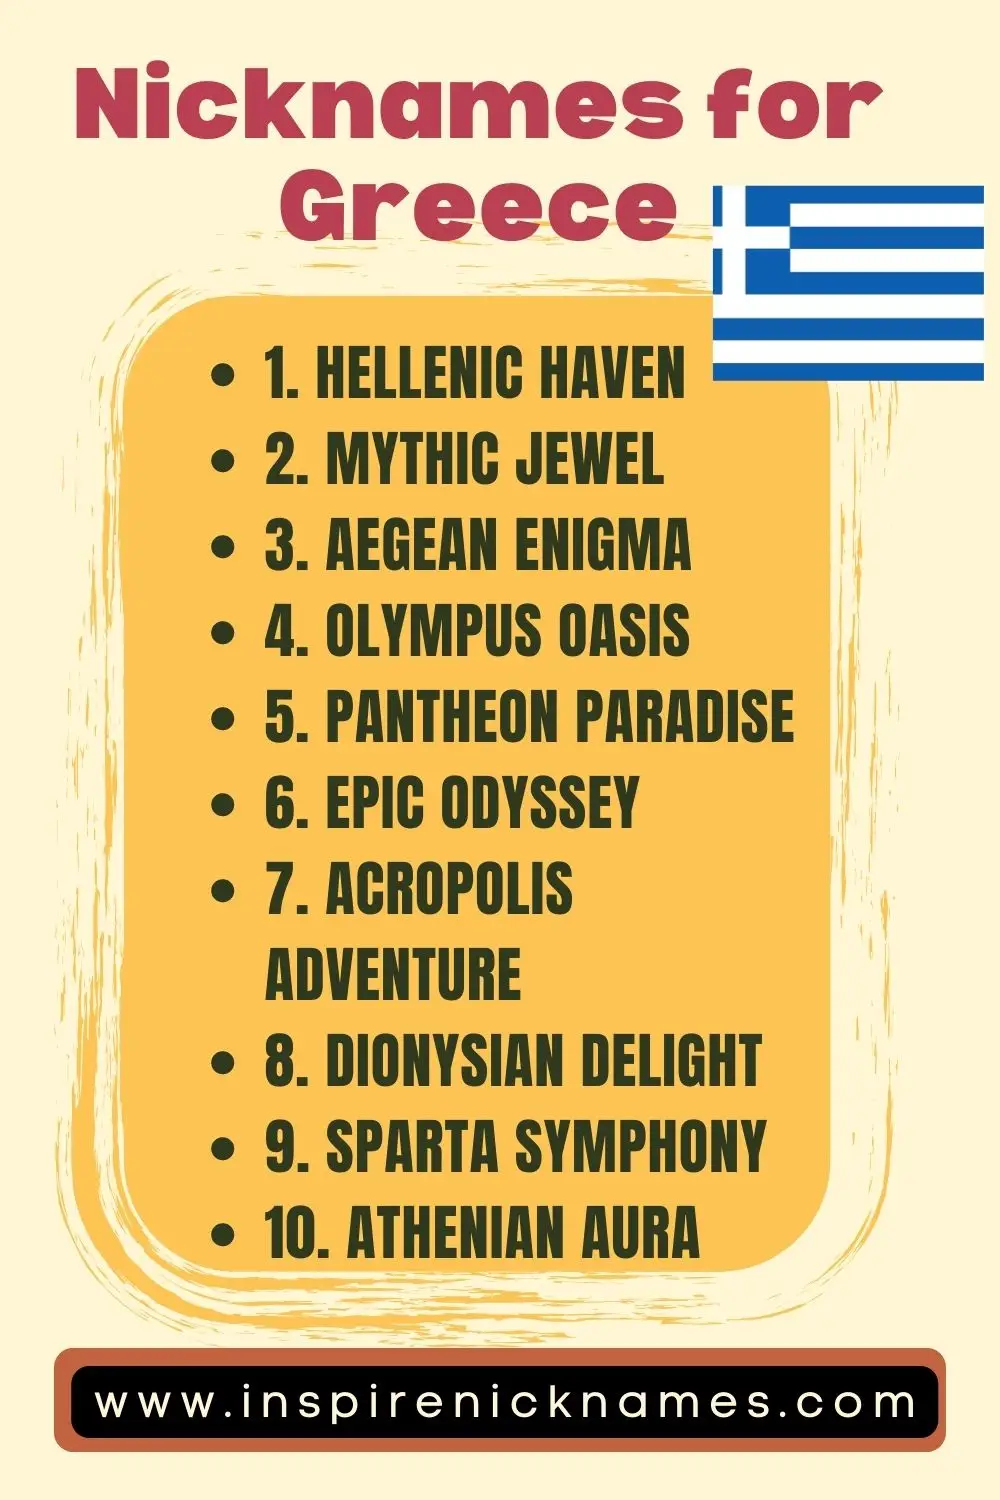 nicknames for Greece list ideas